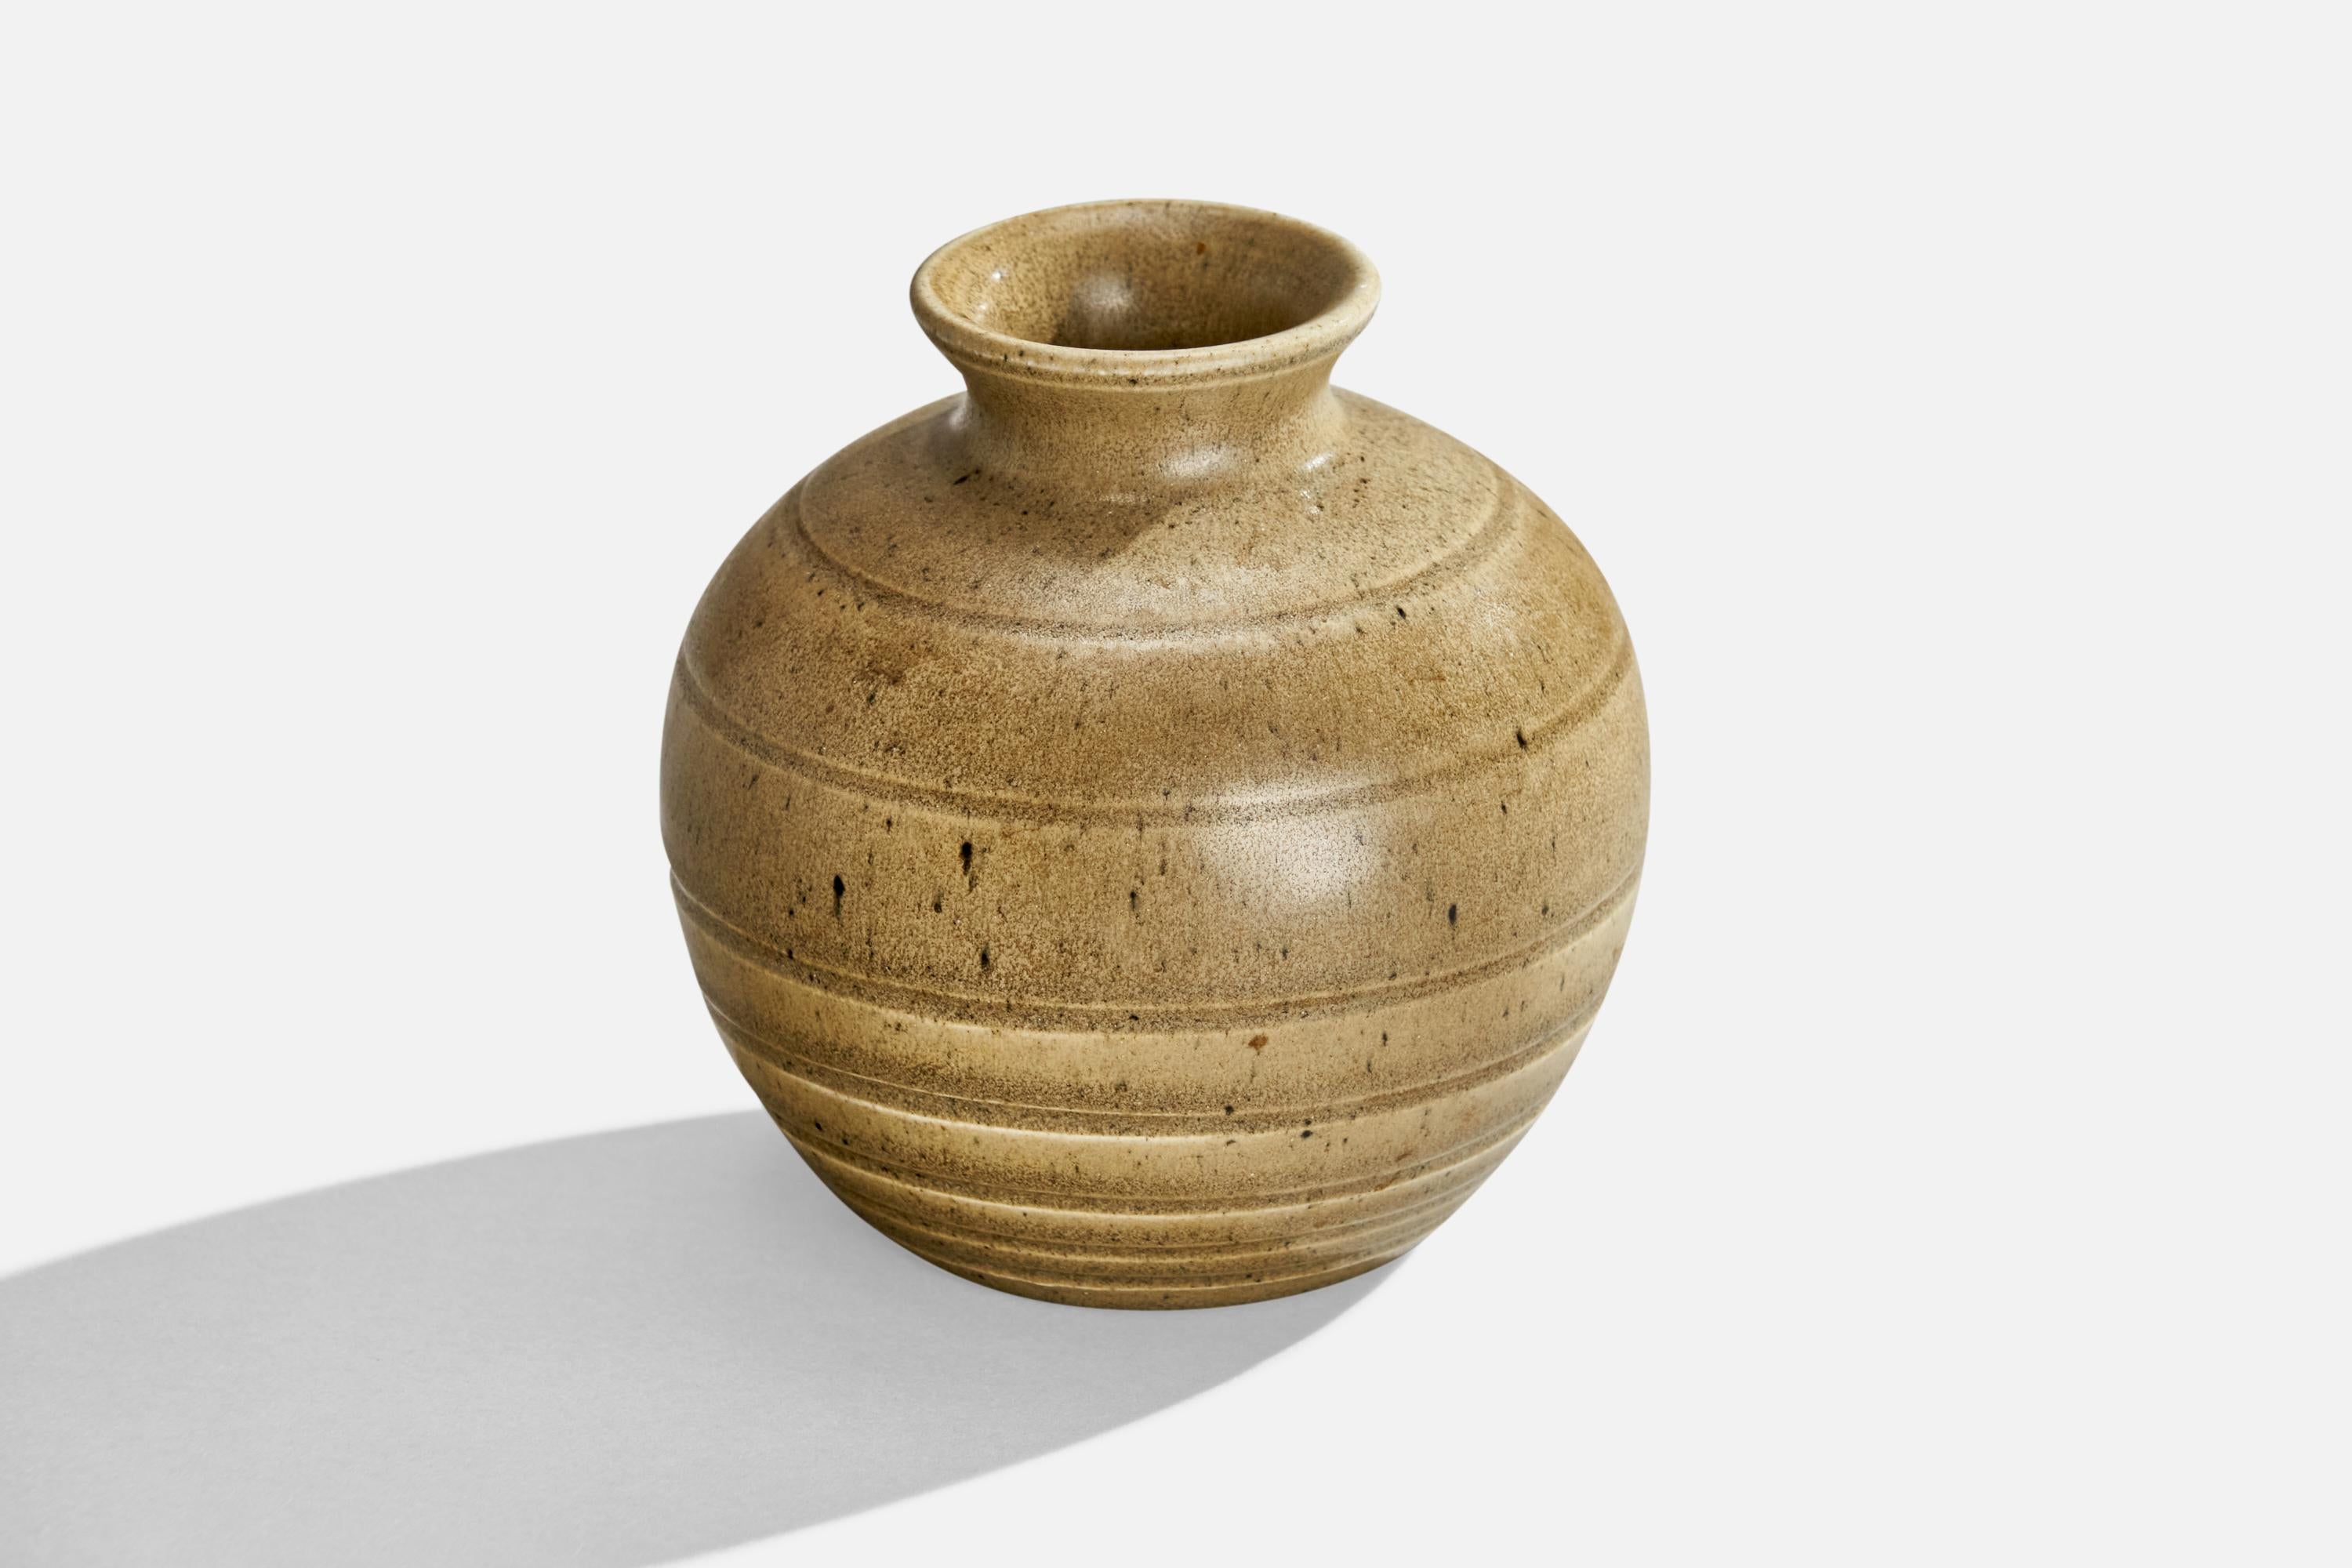 A grey-glazed incised ceramic vase designed and produced by Bo Fajans, Gefle, Sweden, c. 1940s.